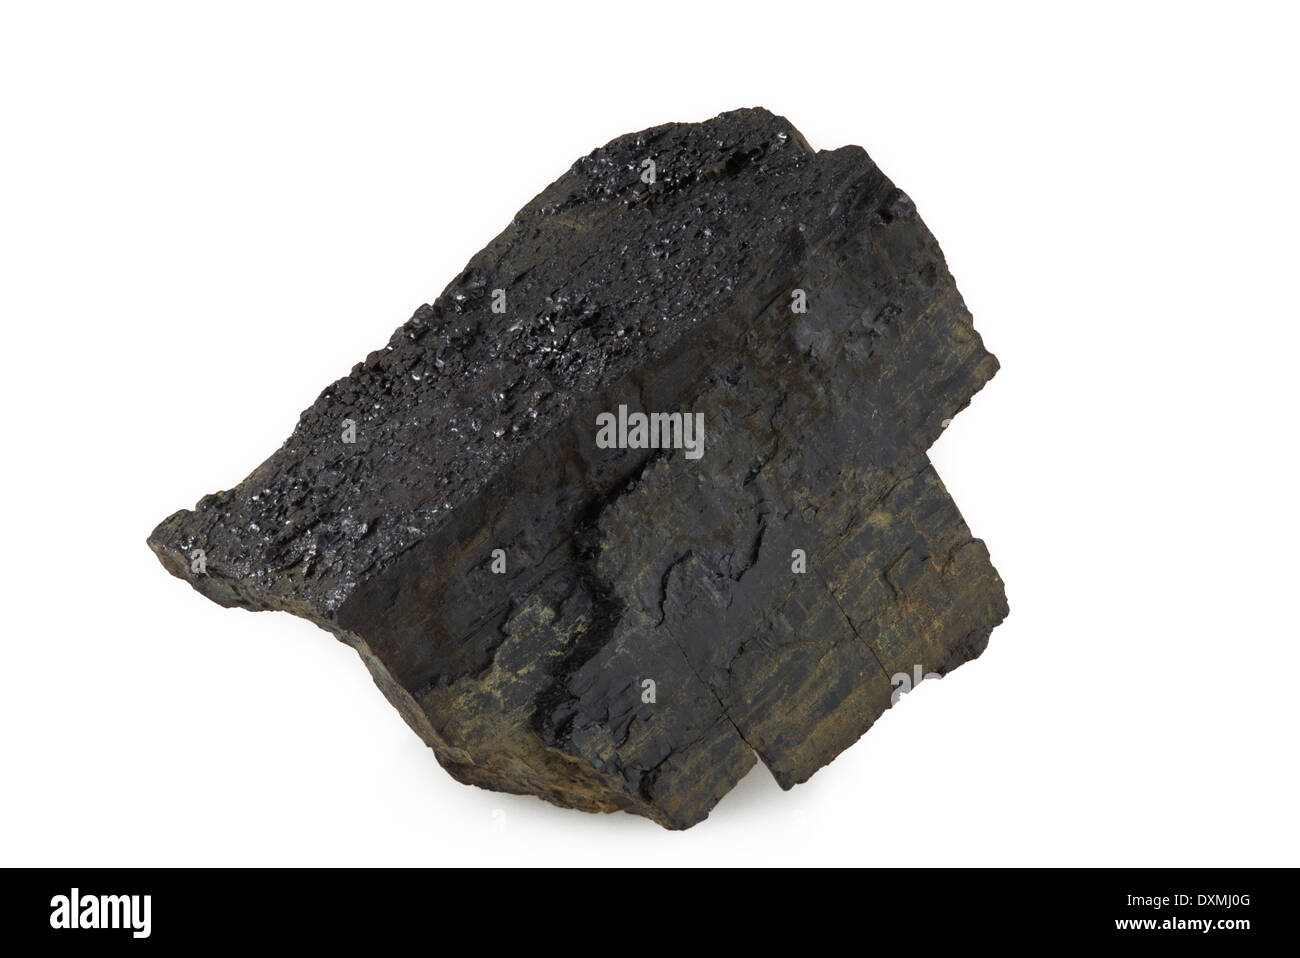 Briquette Coal Fuel Coke Lignite, coal transparent background PNG